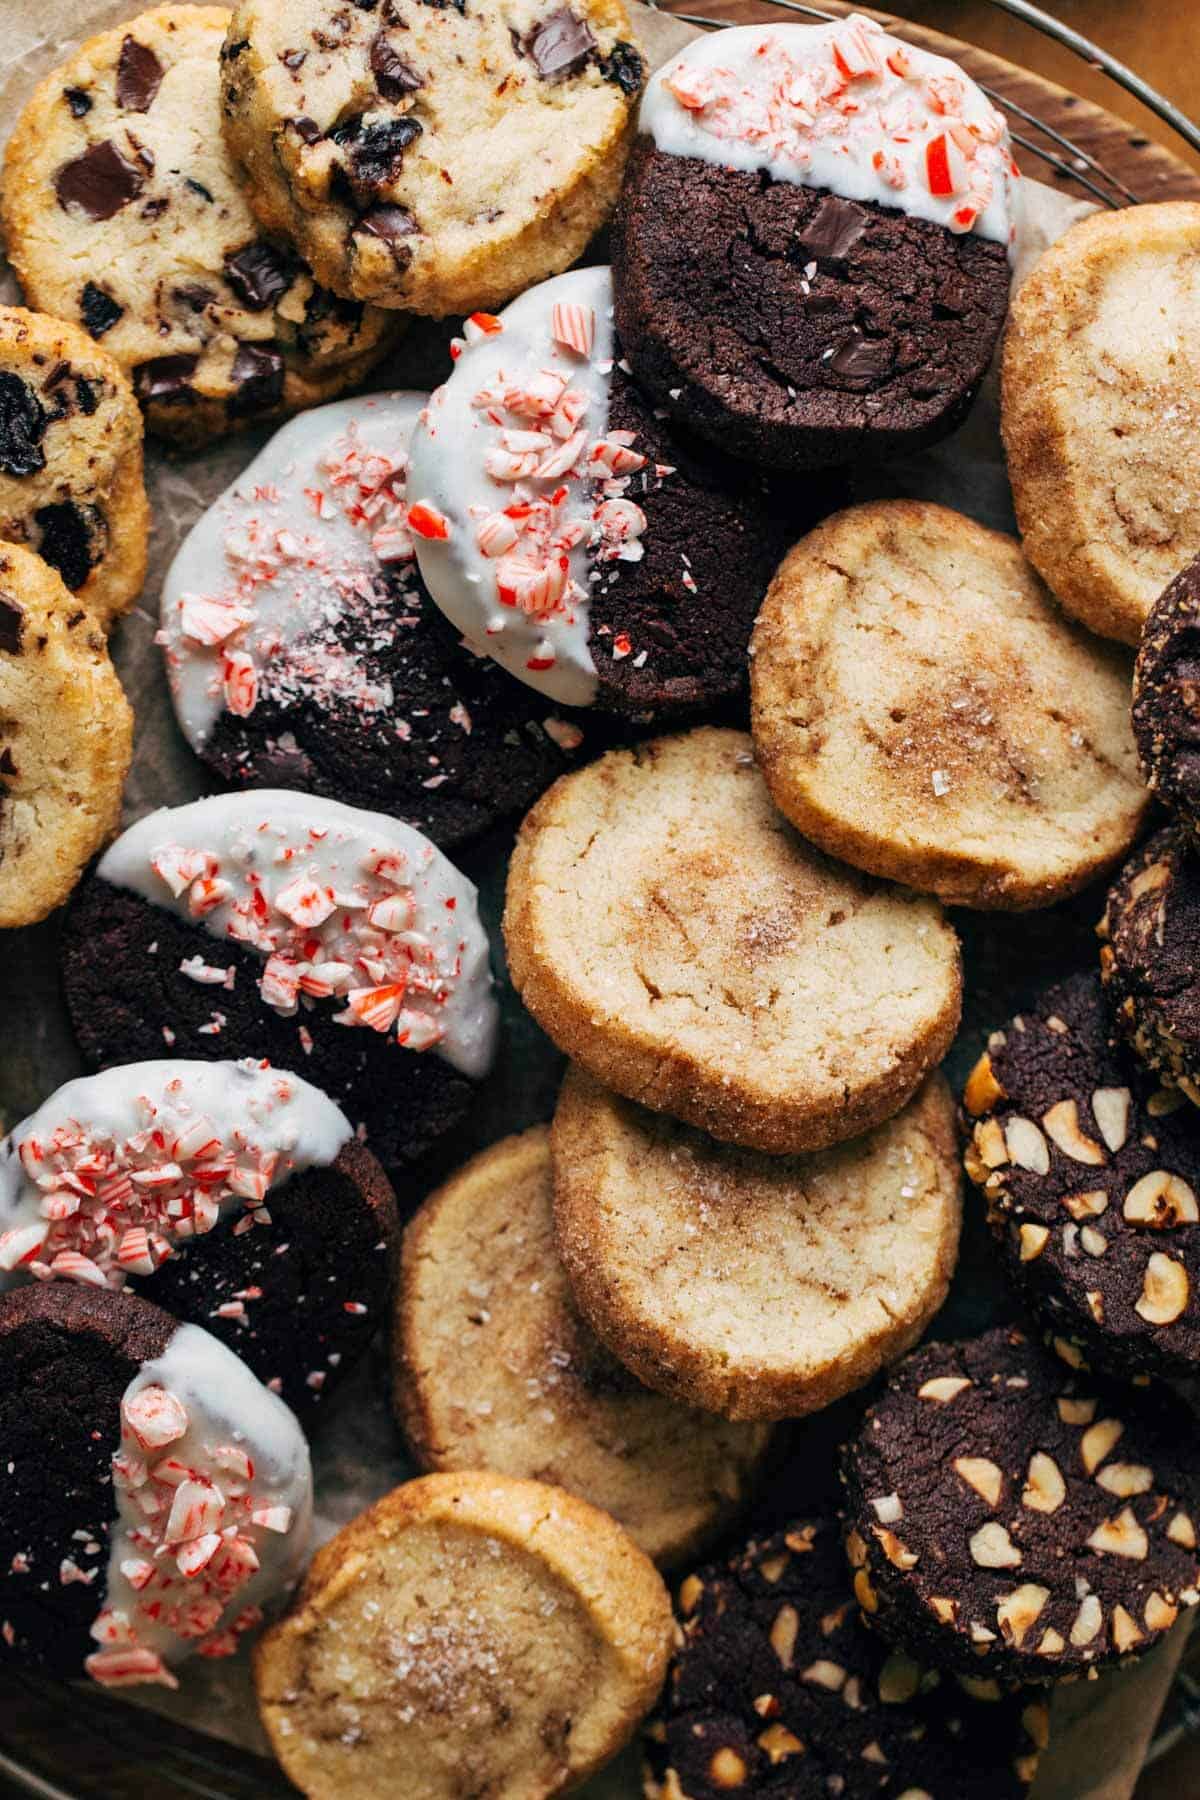 https://butternutbakeryblog.com/wp-content/uploads/2020/12/slice-and-bake-cookies-close-up.jpg